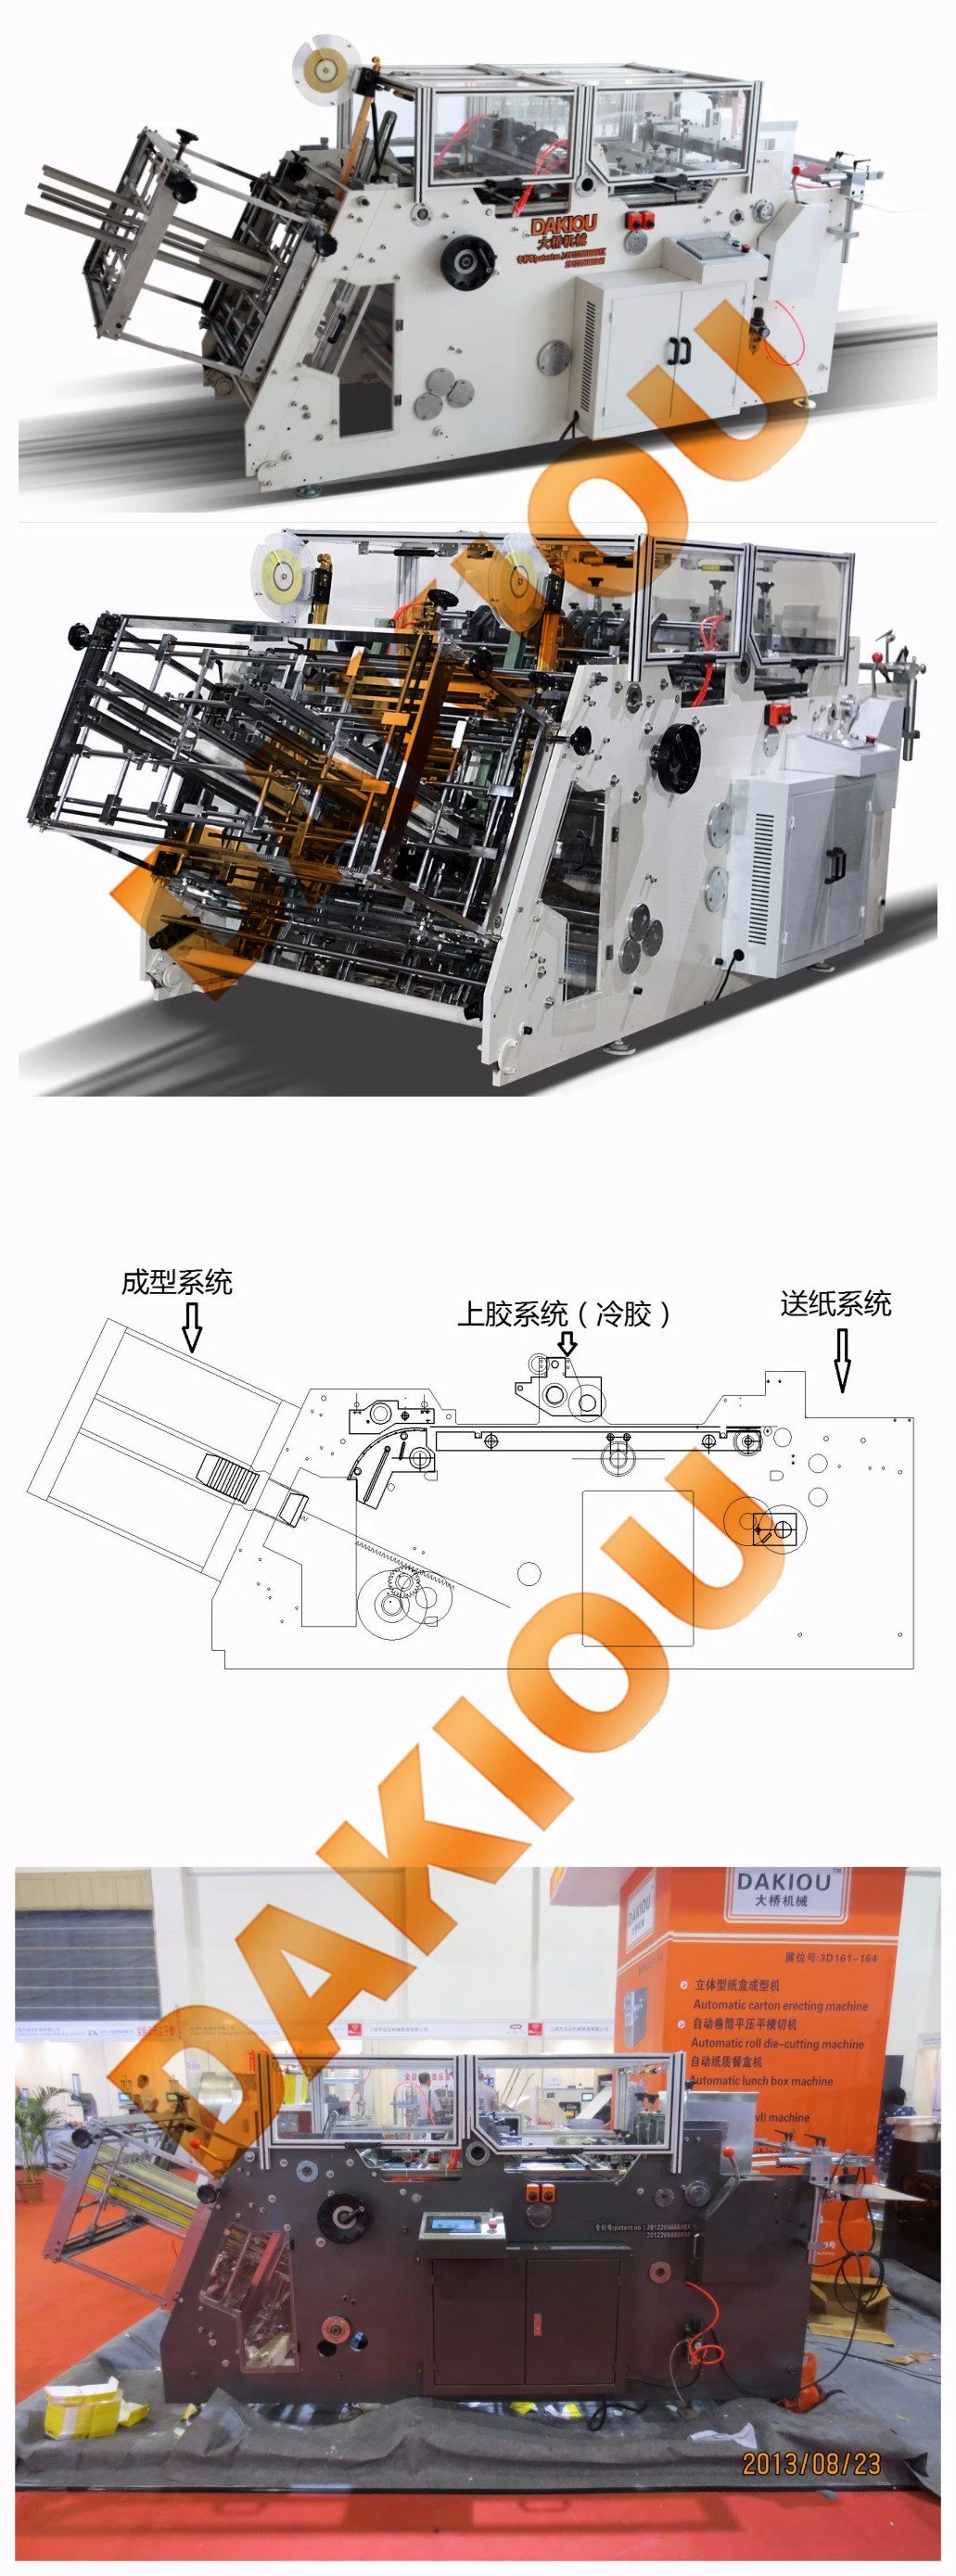 Hbj-D1200 Paper Carton Erecting Forming Machine to Manufacturing Paper Box